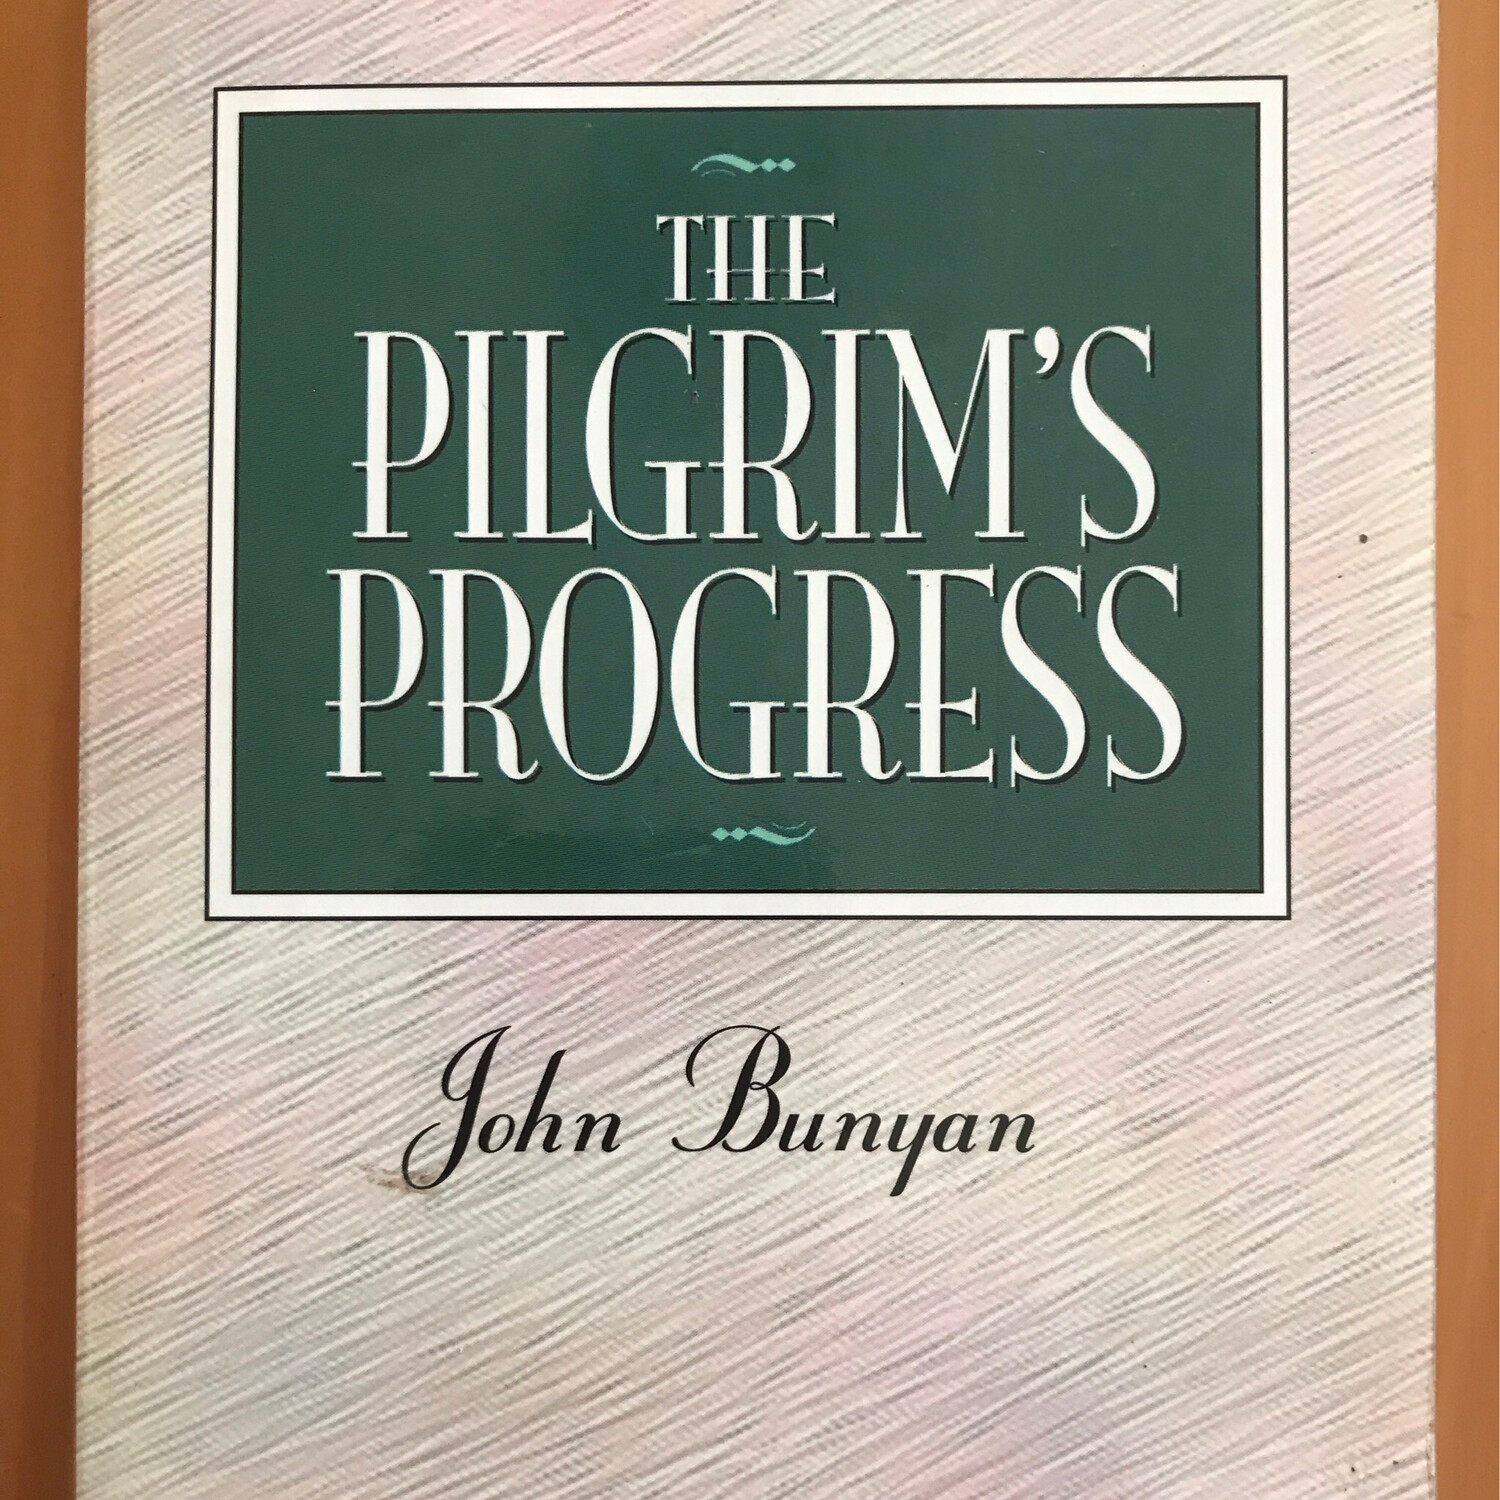 The Pilgrim’s Progress, John Bunyan